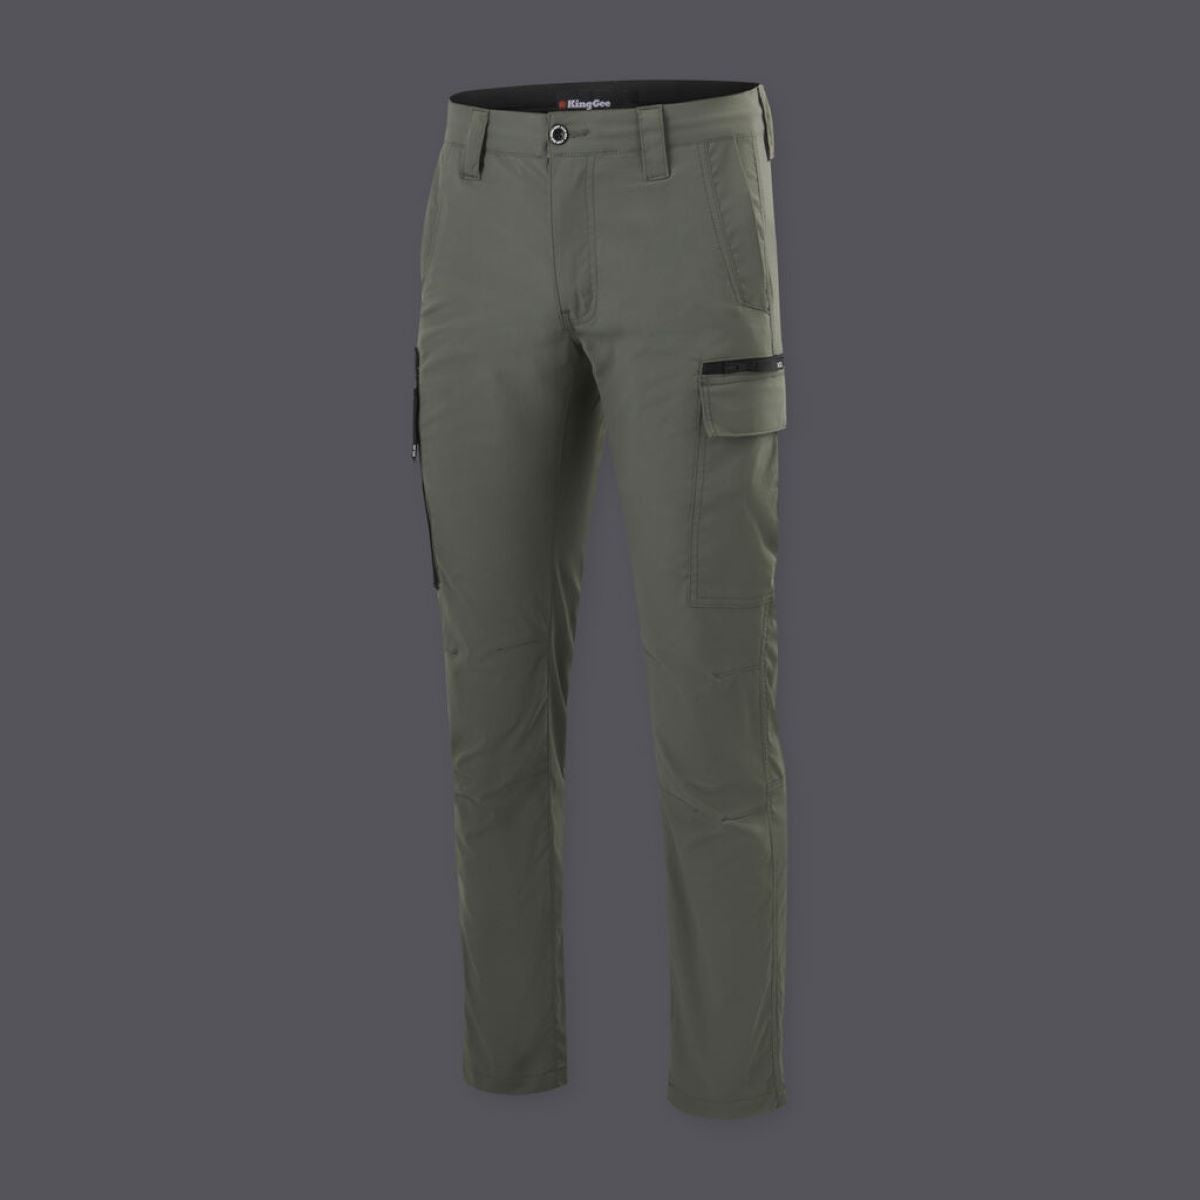 Decathlon Trekking / Backpacker Quick Dry Shorts Men (8 Pockets) - Forclaz  | Lazada